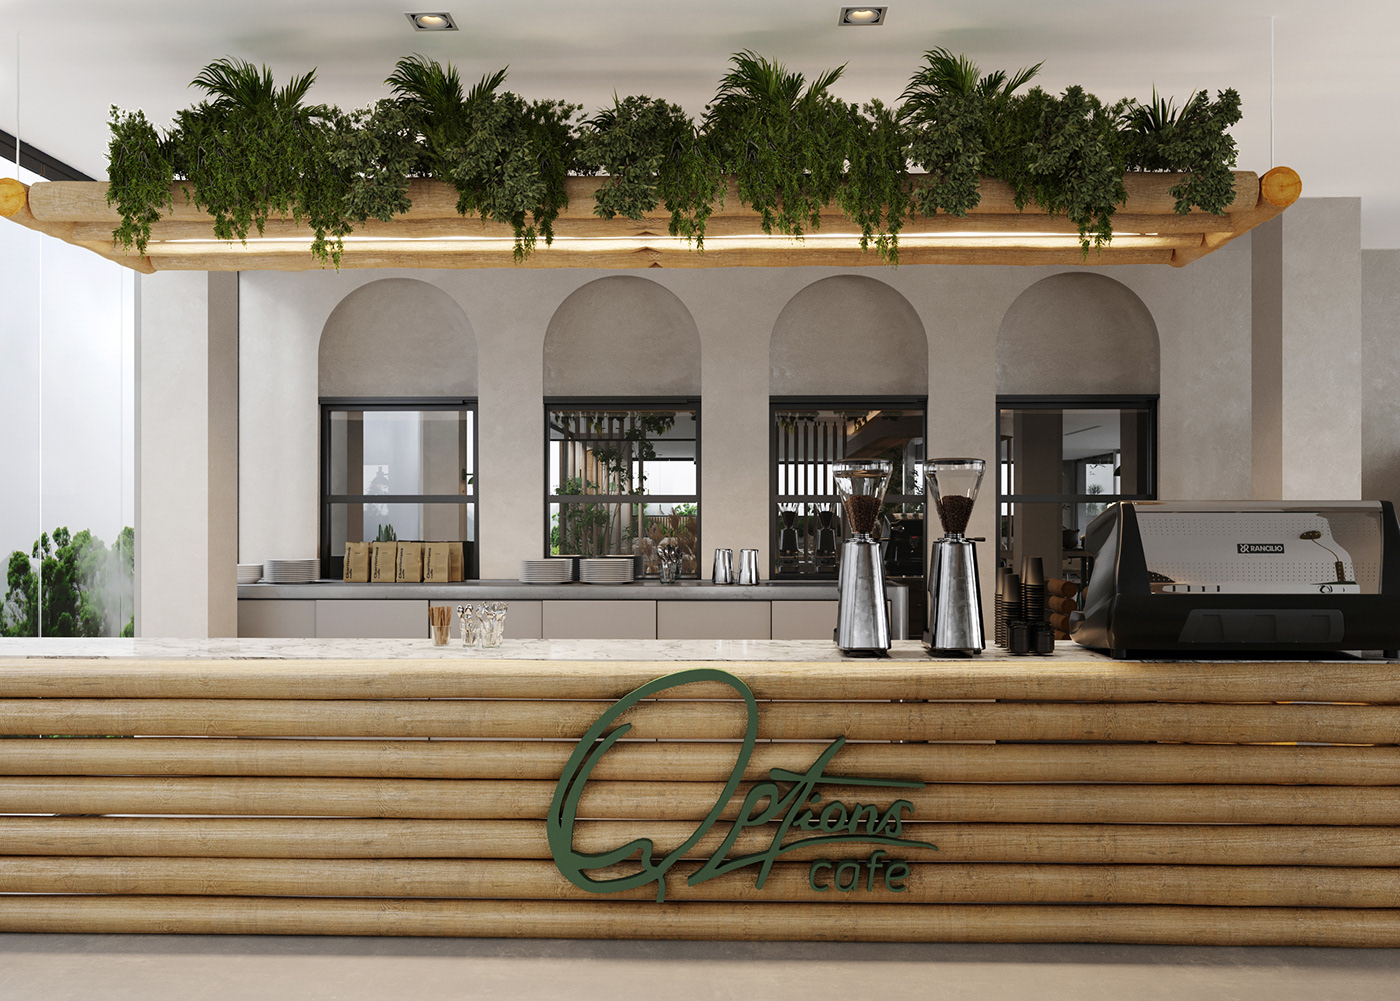 OPTION CAFE IN SAUDI ARABIA